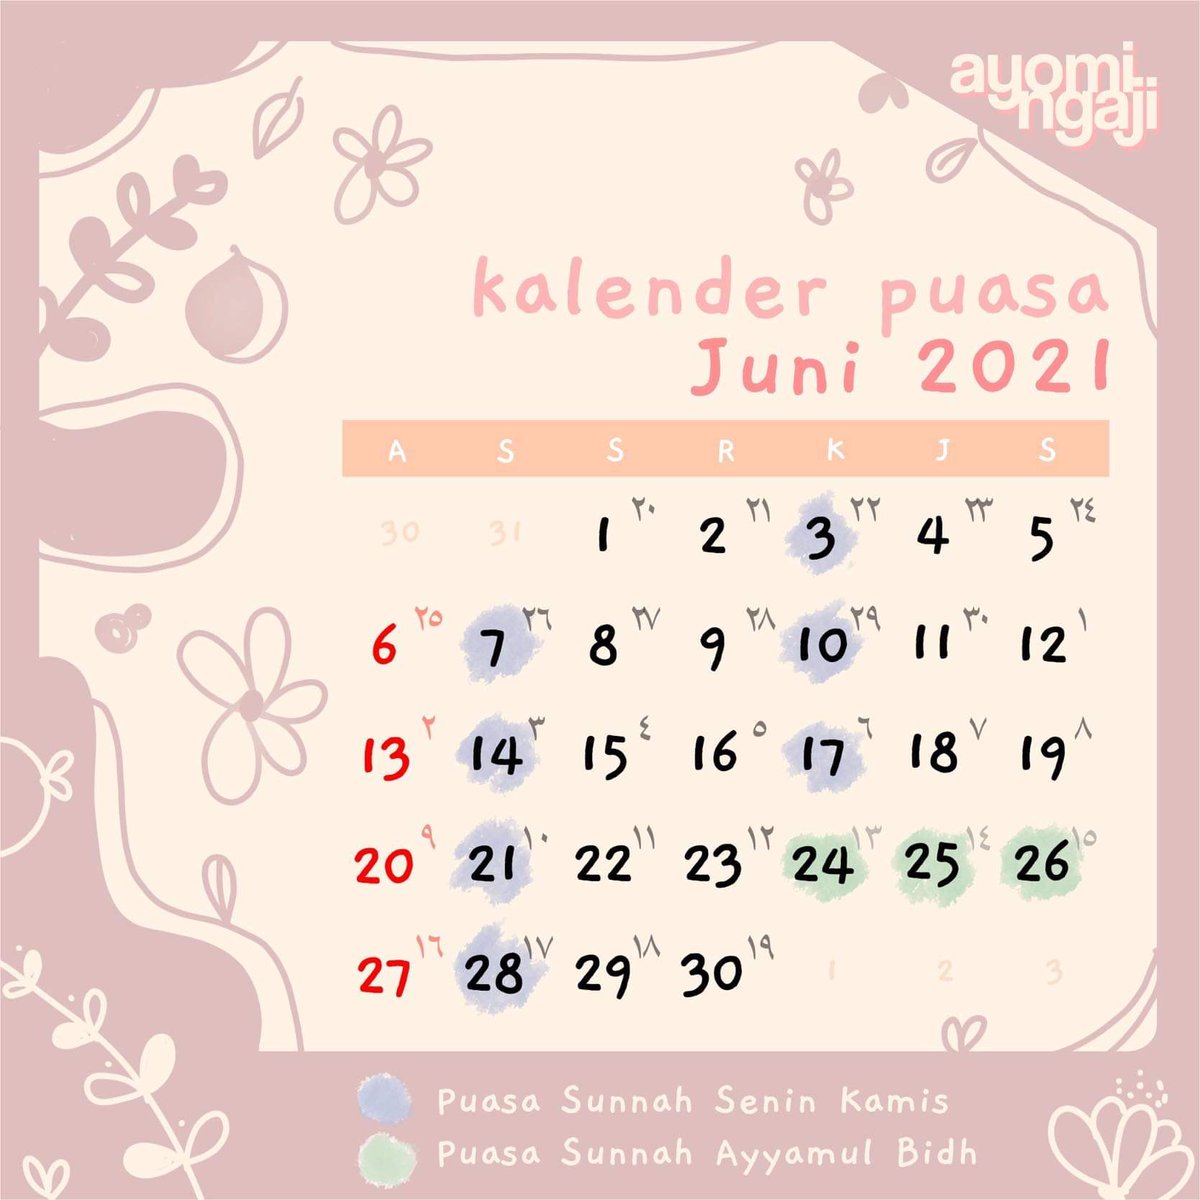 Sunnah kalender 2021 puasa Download Kalender